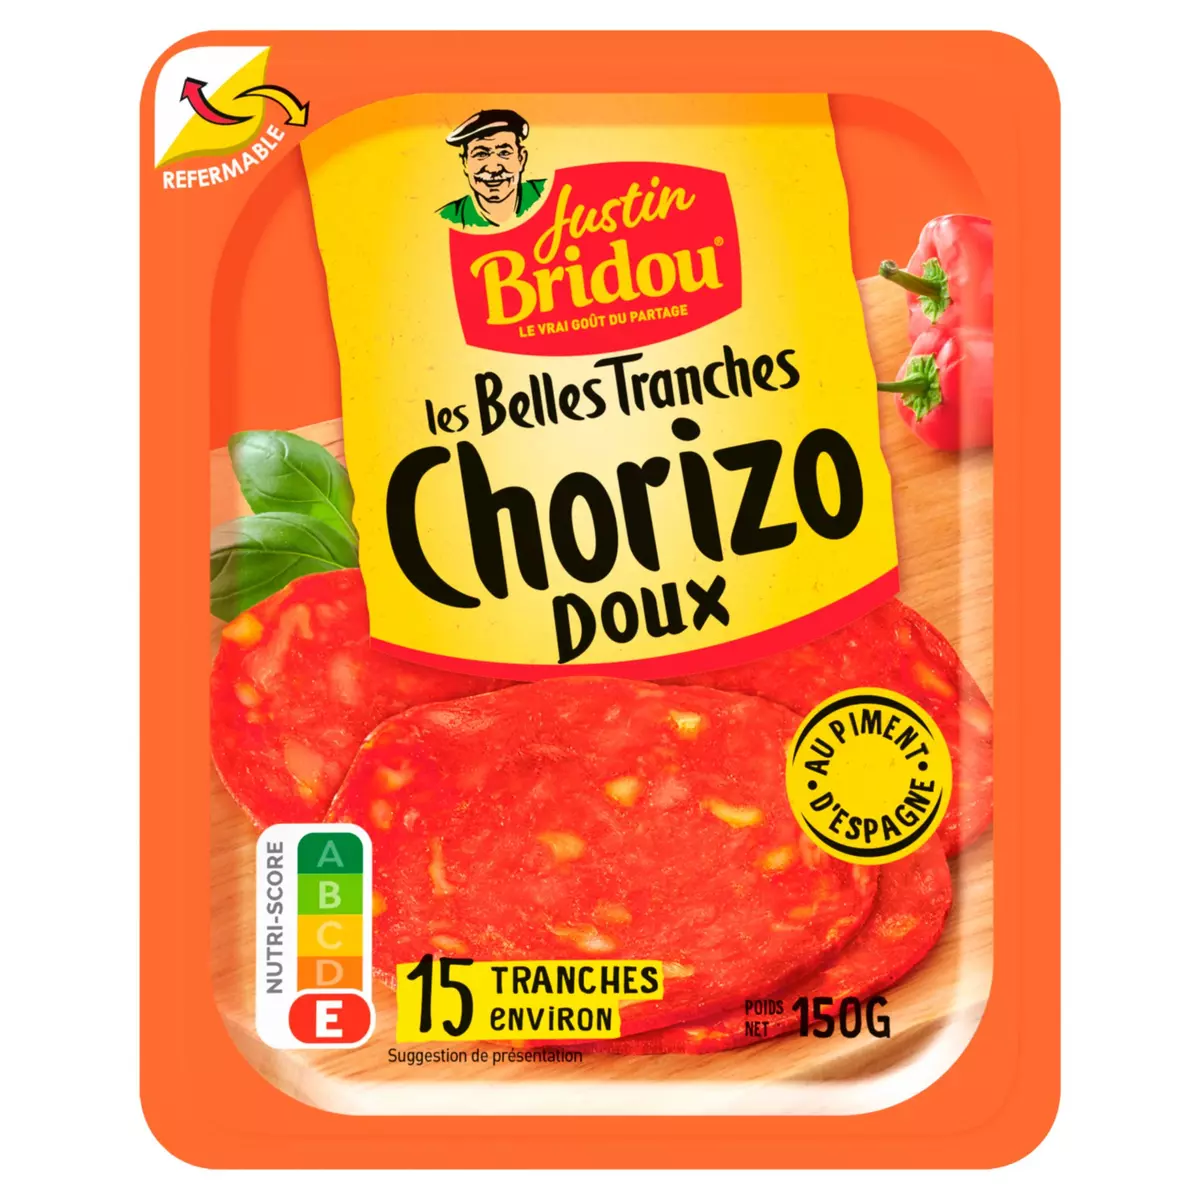 JUSTIN BRIDOU Chorizo doux 15 tranches environ 15 tranches environ 150g